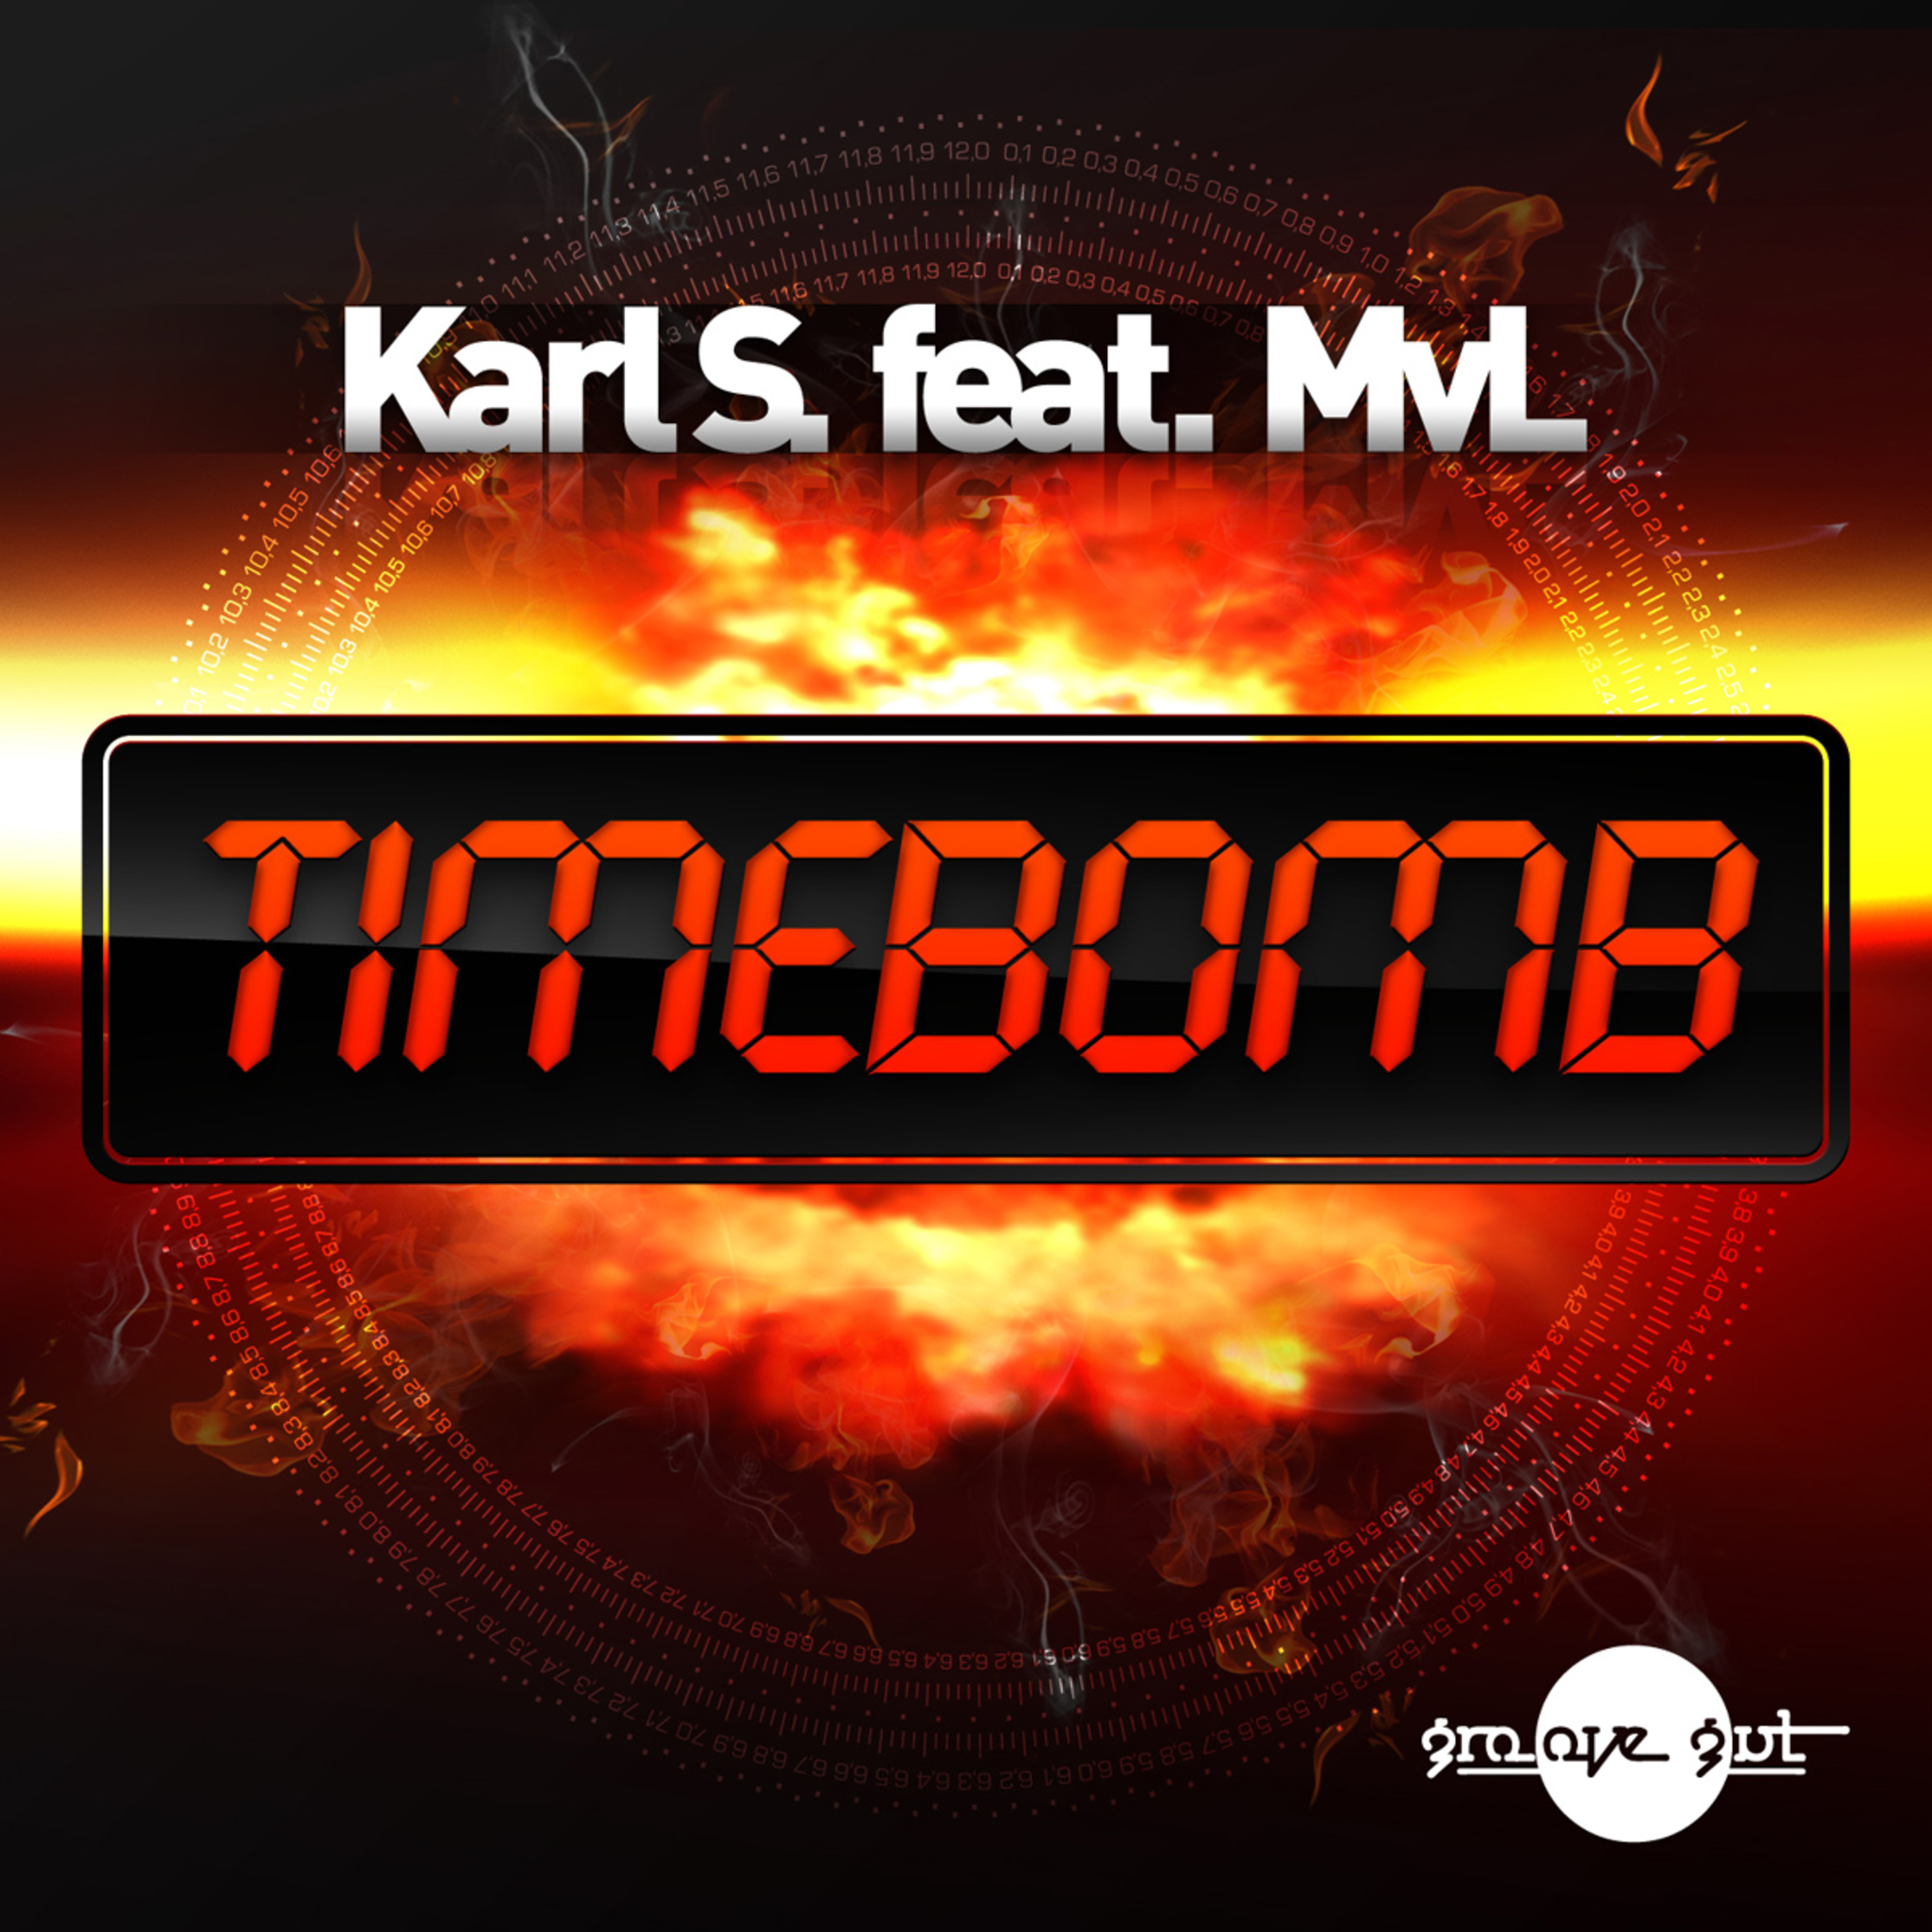 Timebomb (Digiwave Remix Edit)